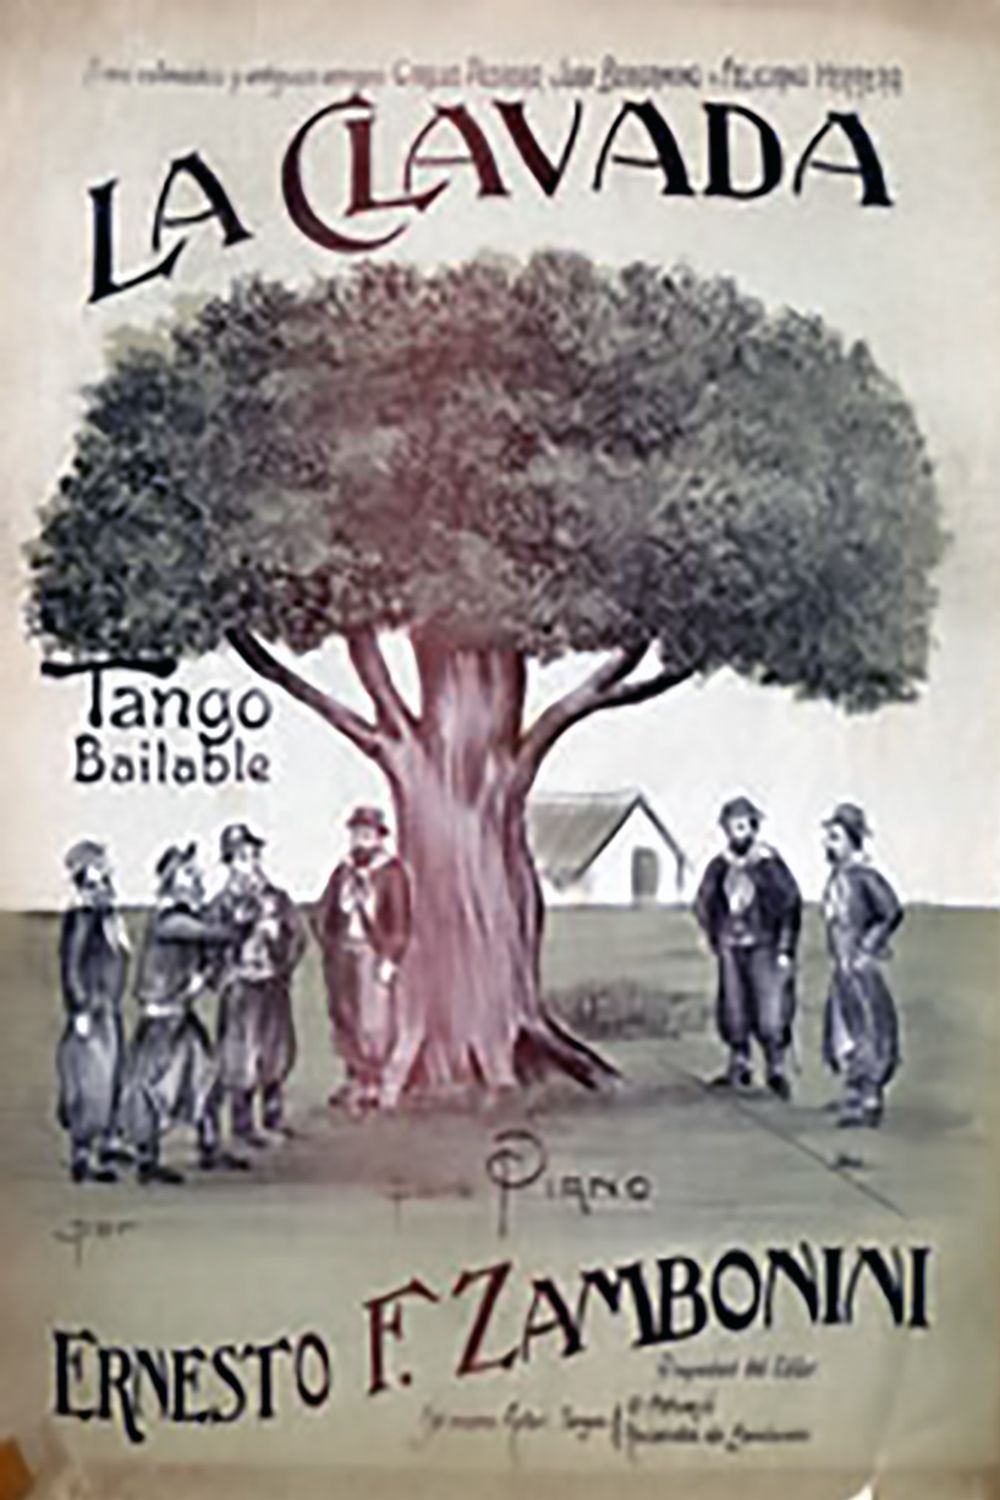 "La clavada", Argentine Tango music sheet cover.